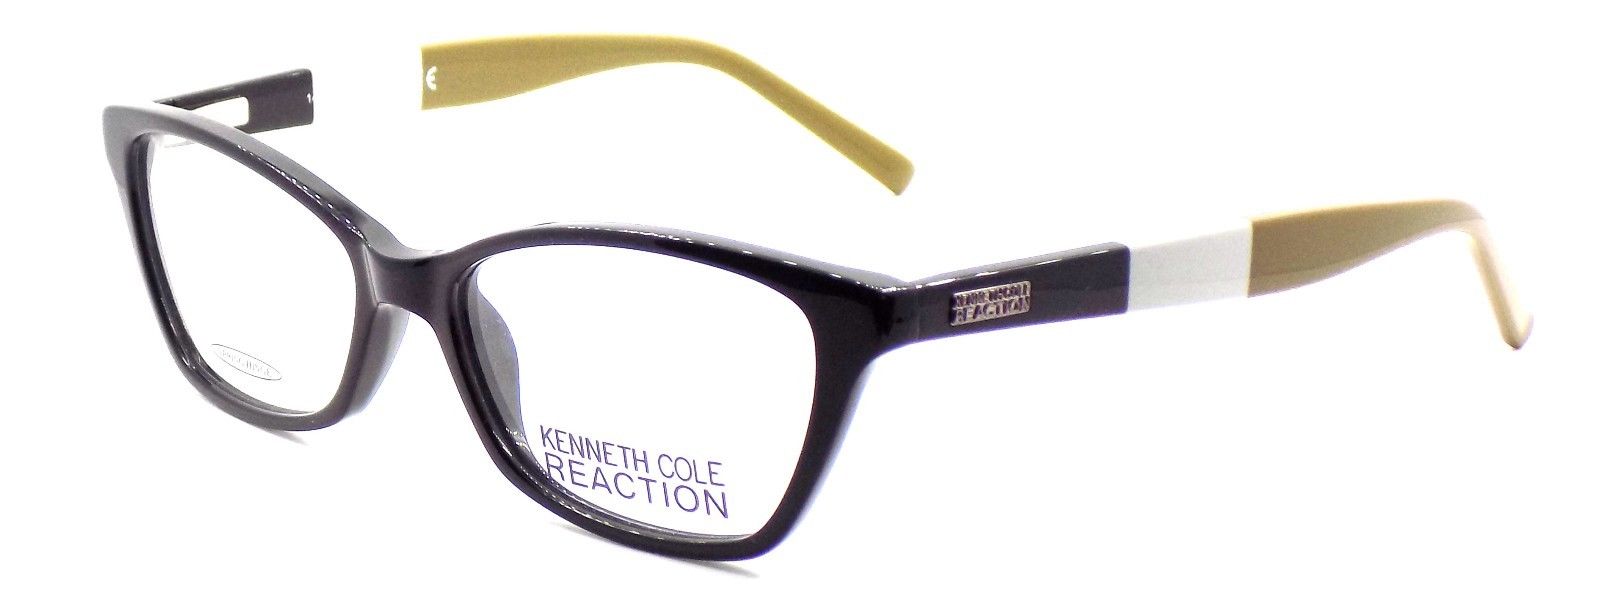 1-Kenneth Cole REACTION KC0766 001 Women's Eyeglasses Frames 52-16-140 Shiny Black-664689666423-IKSpecs